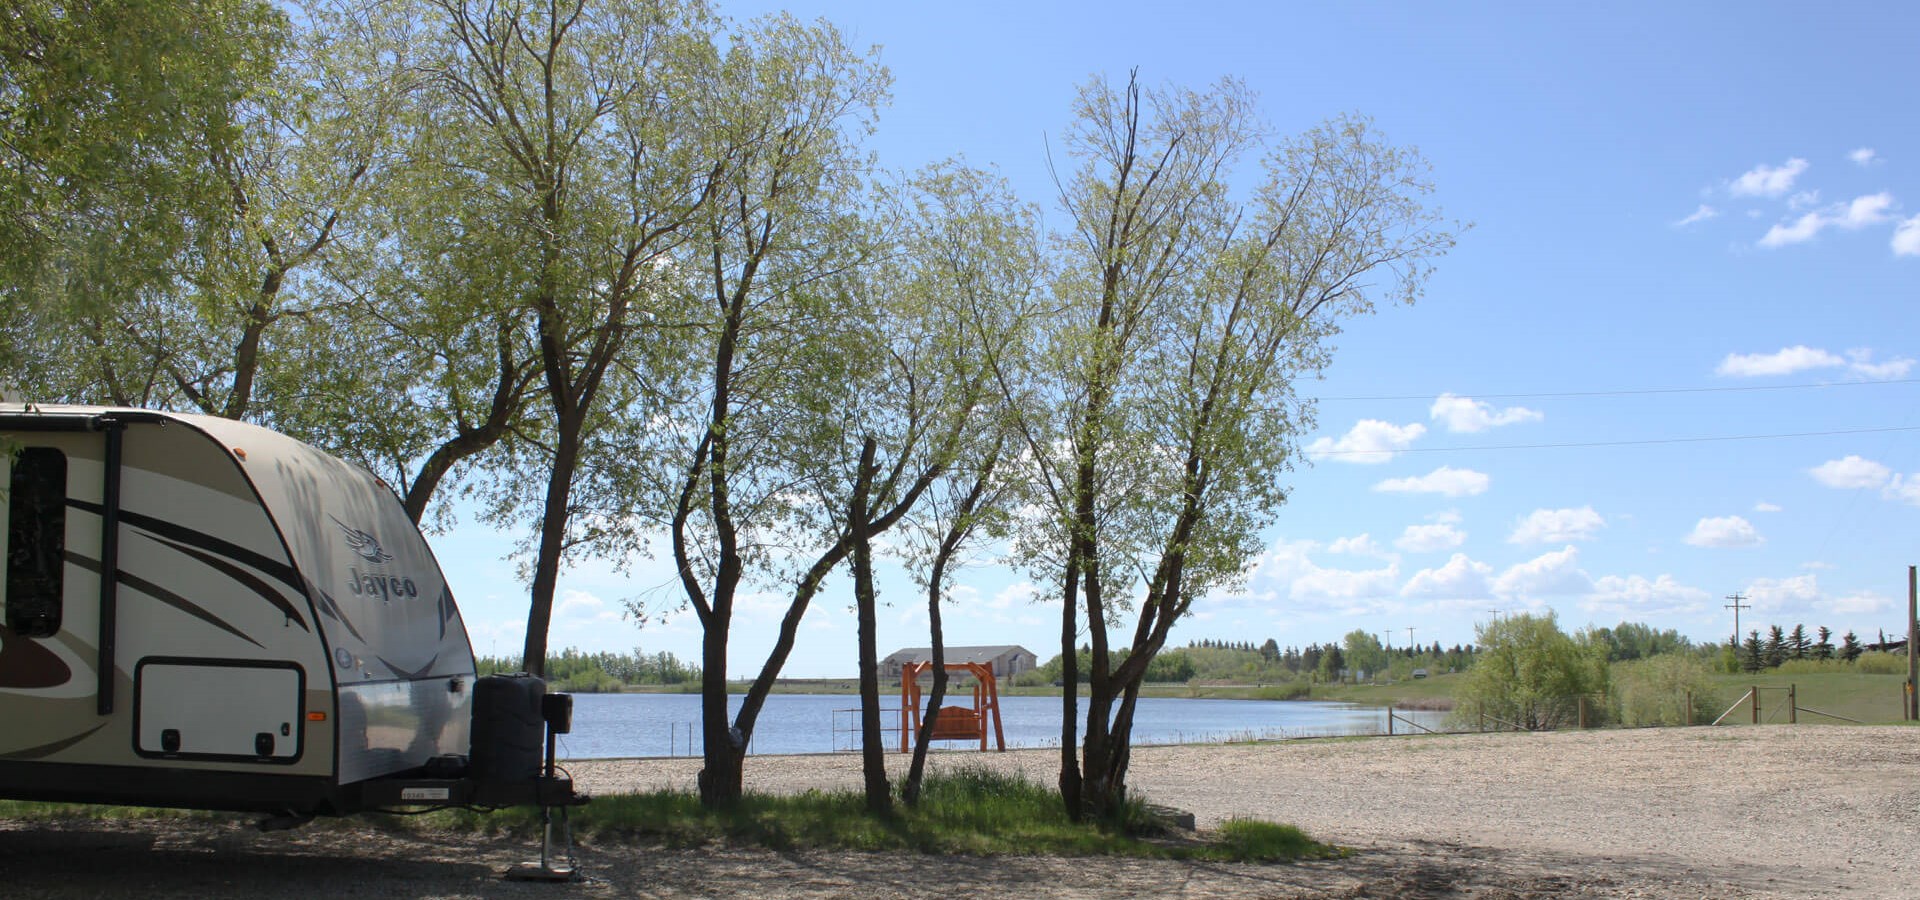 West Edmonton Mall  Heritage Lake Campground & RV Park